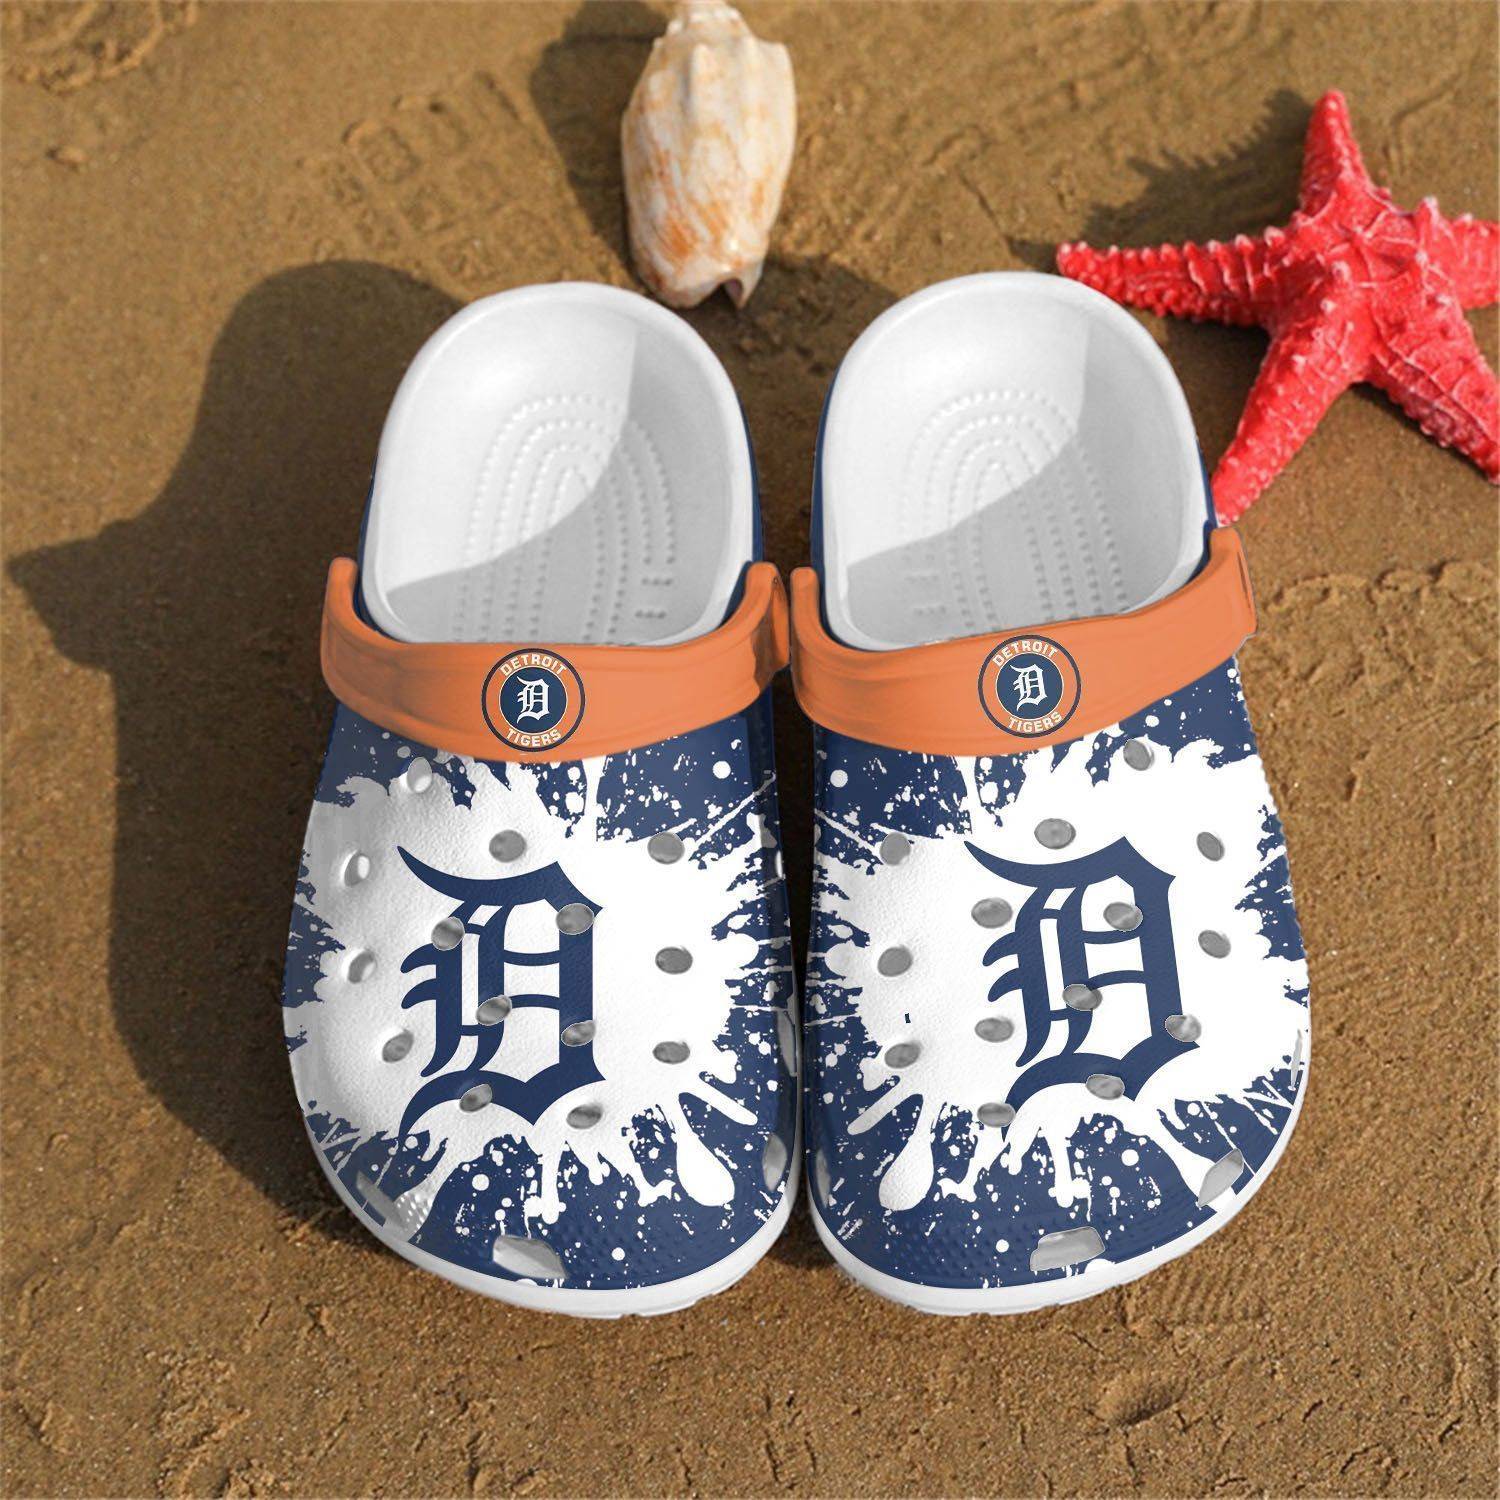 Detroit Tigers Mlb Teams Gift For Fan Crocss Clog Shoescrocband Clogs Comfy Foot